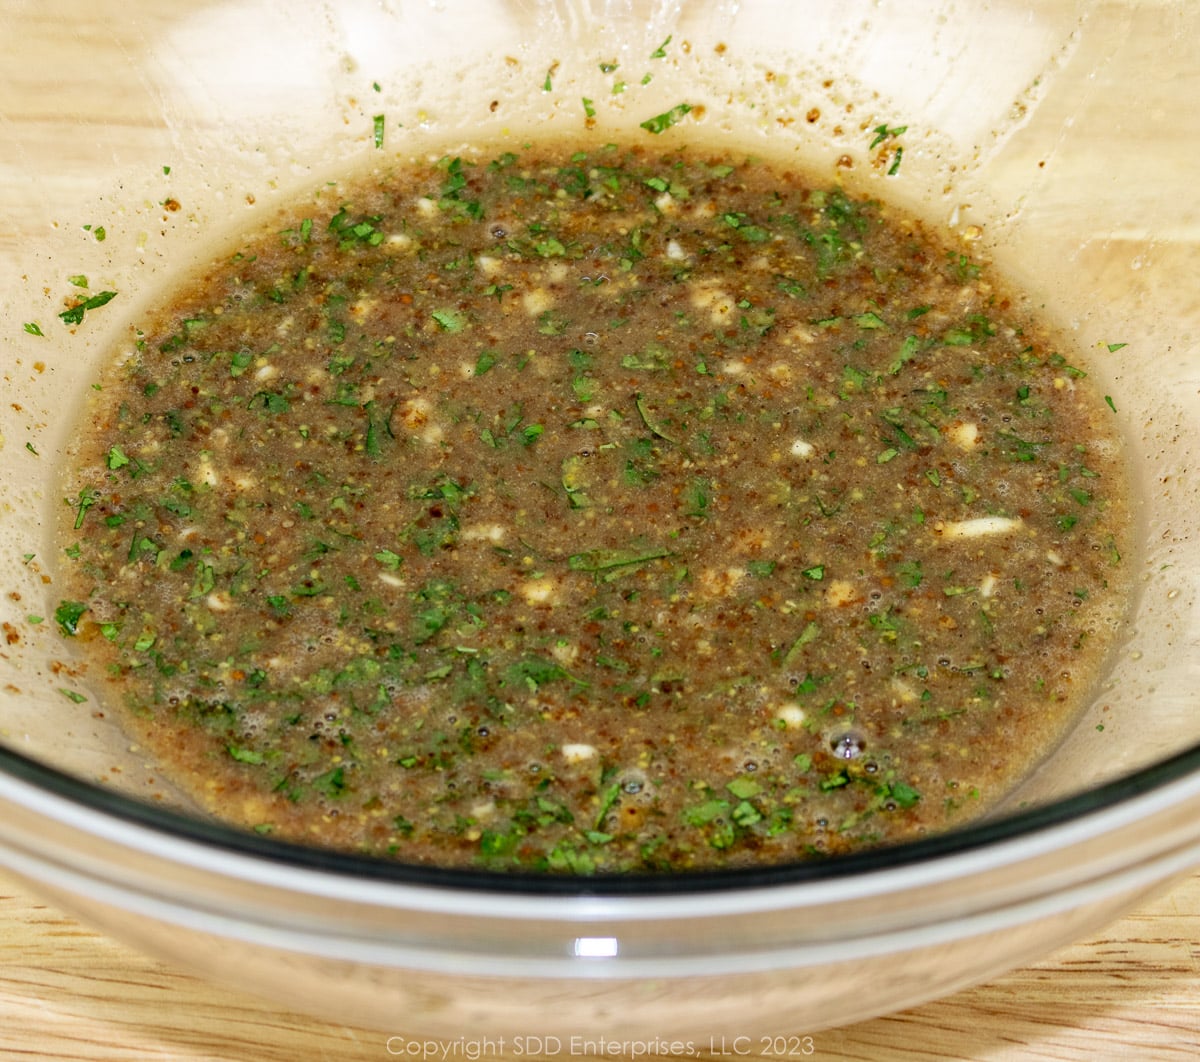 Cilantro Creole Mustard Marinade in a glass bowl